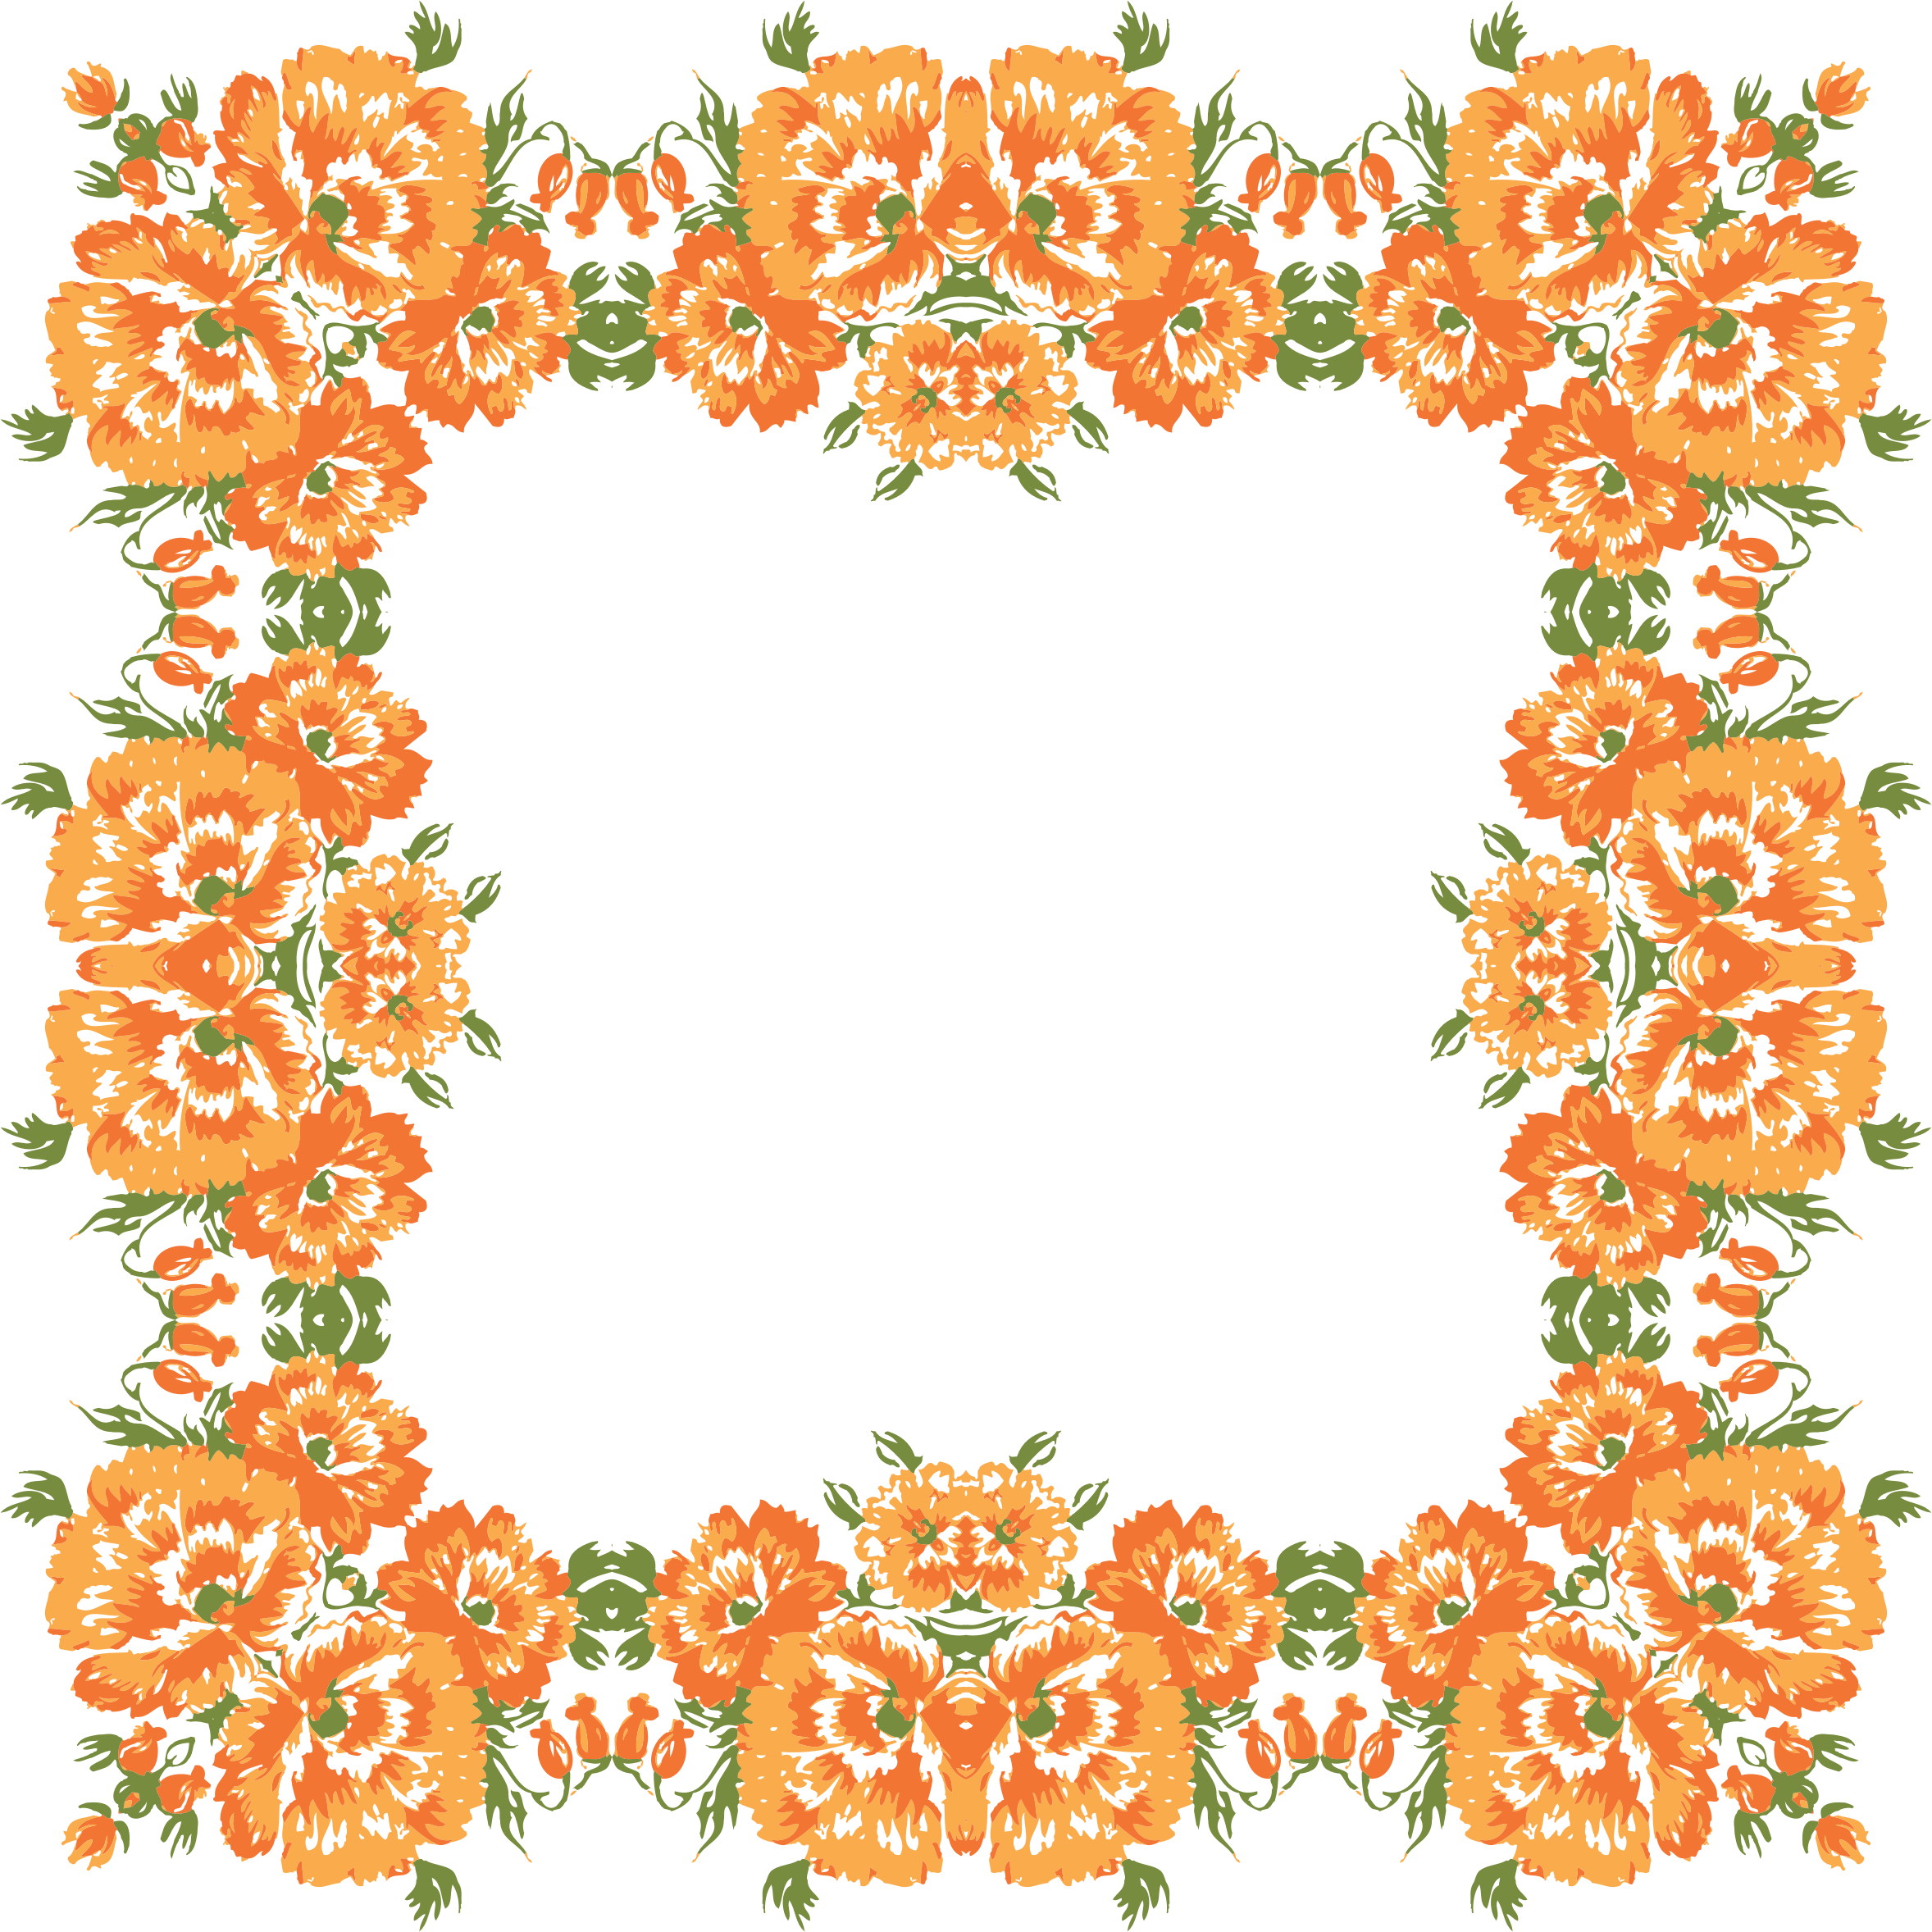 Floral Wreath Frame 2 - Floral Wreath Frame 2 (2356x2356)